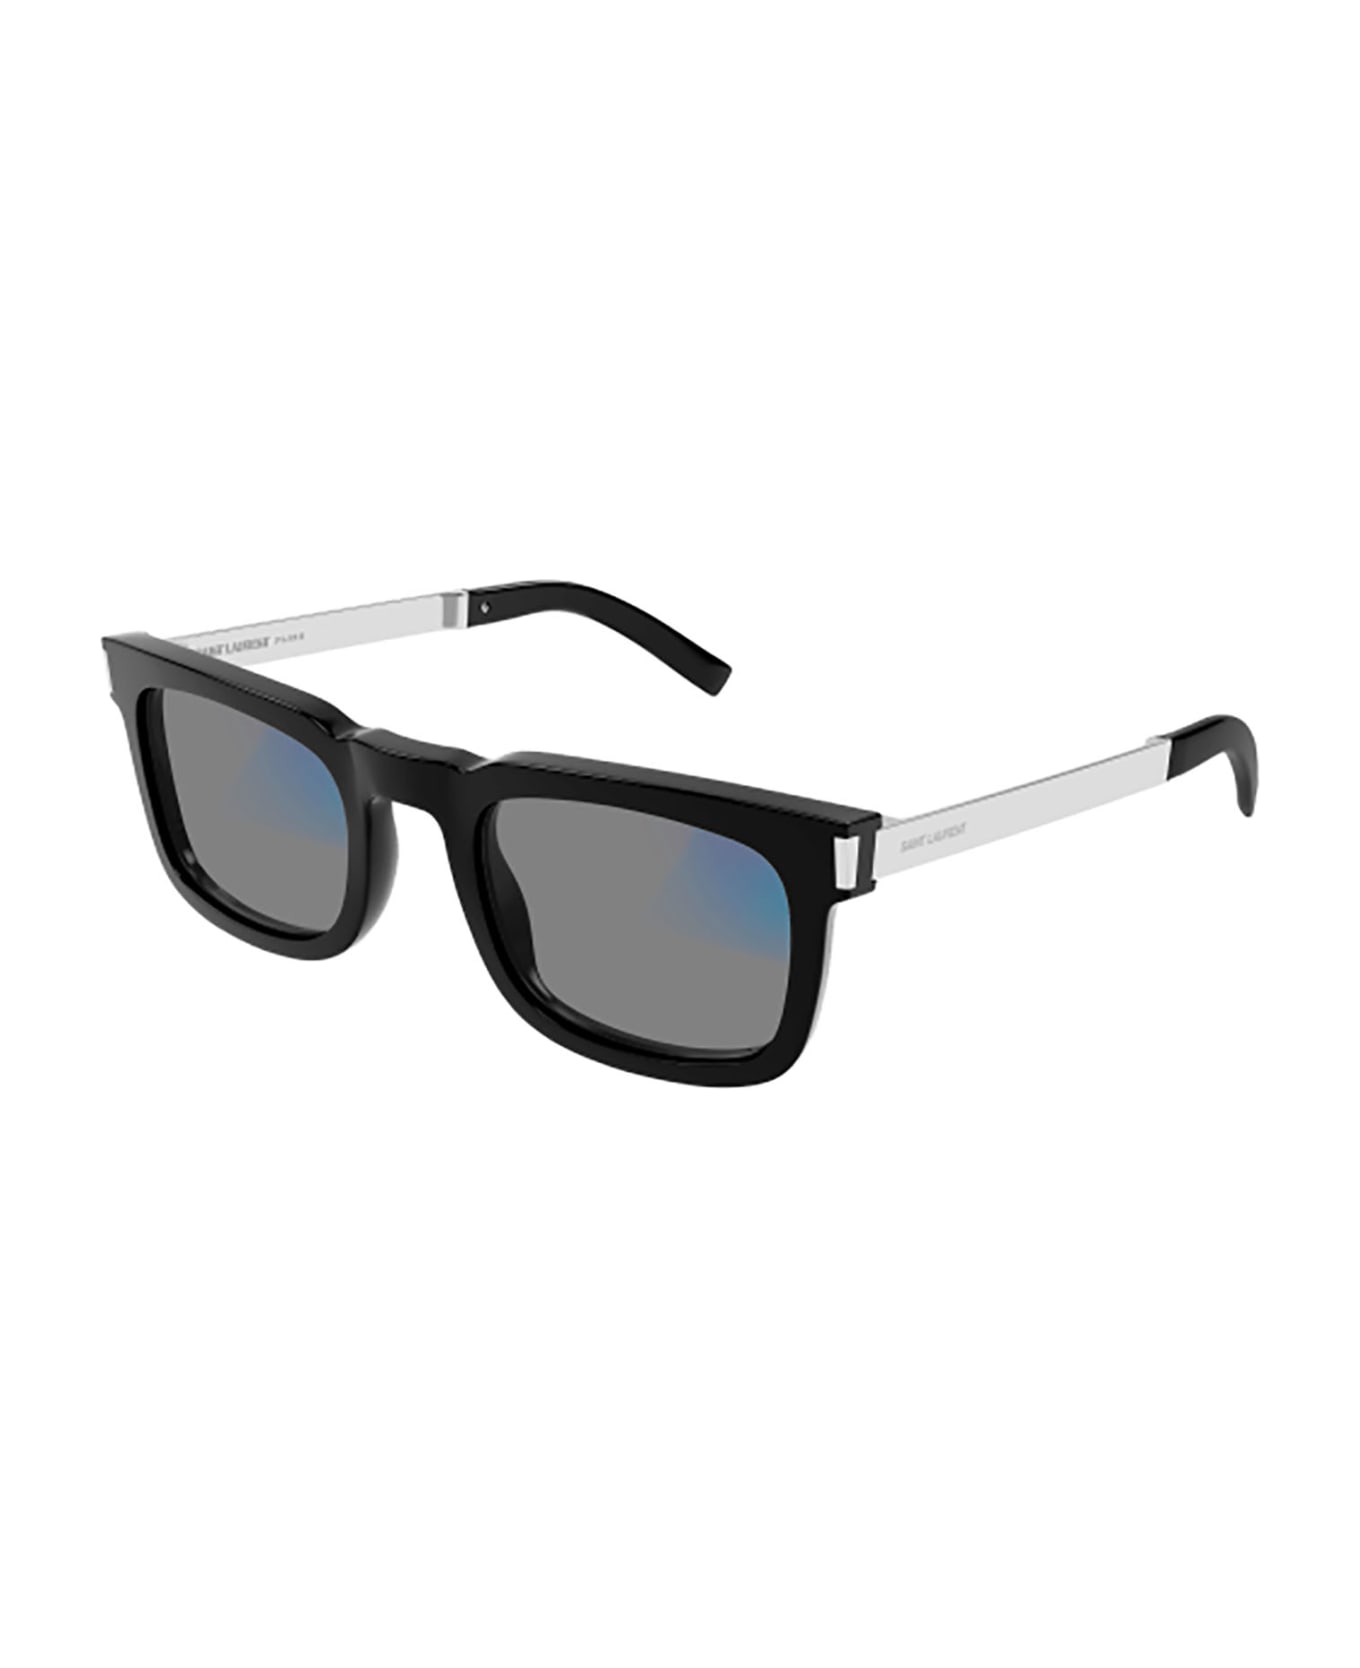 Saint Laurent Eyewear Sl 581 Sunglasses - 003 black silver transpar